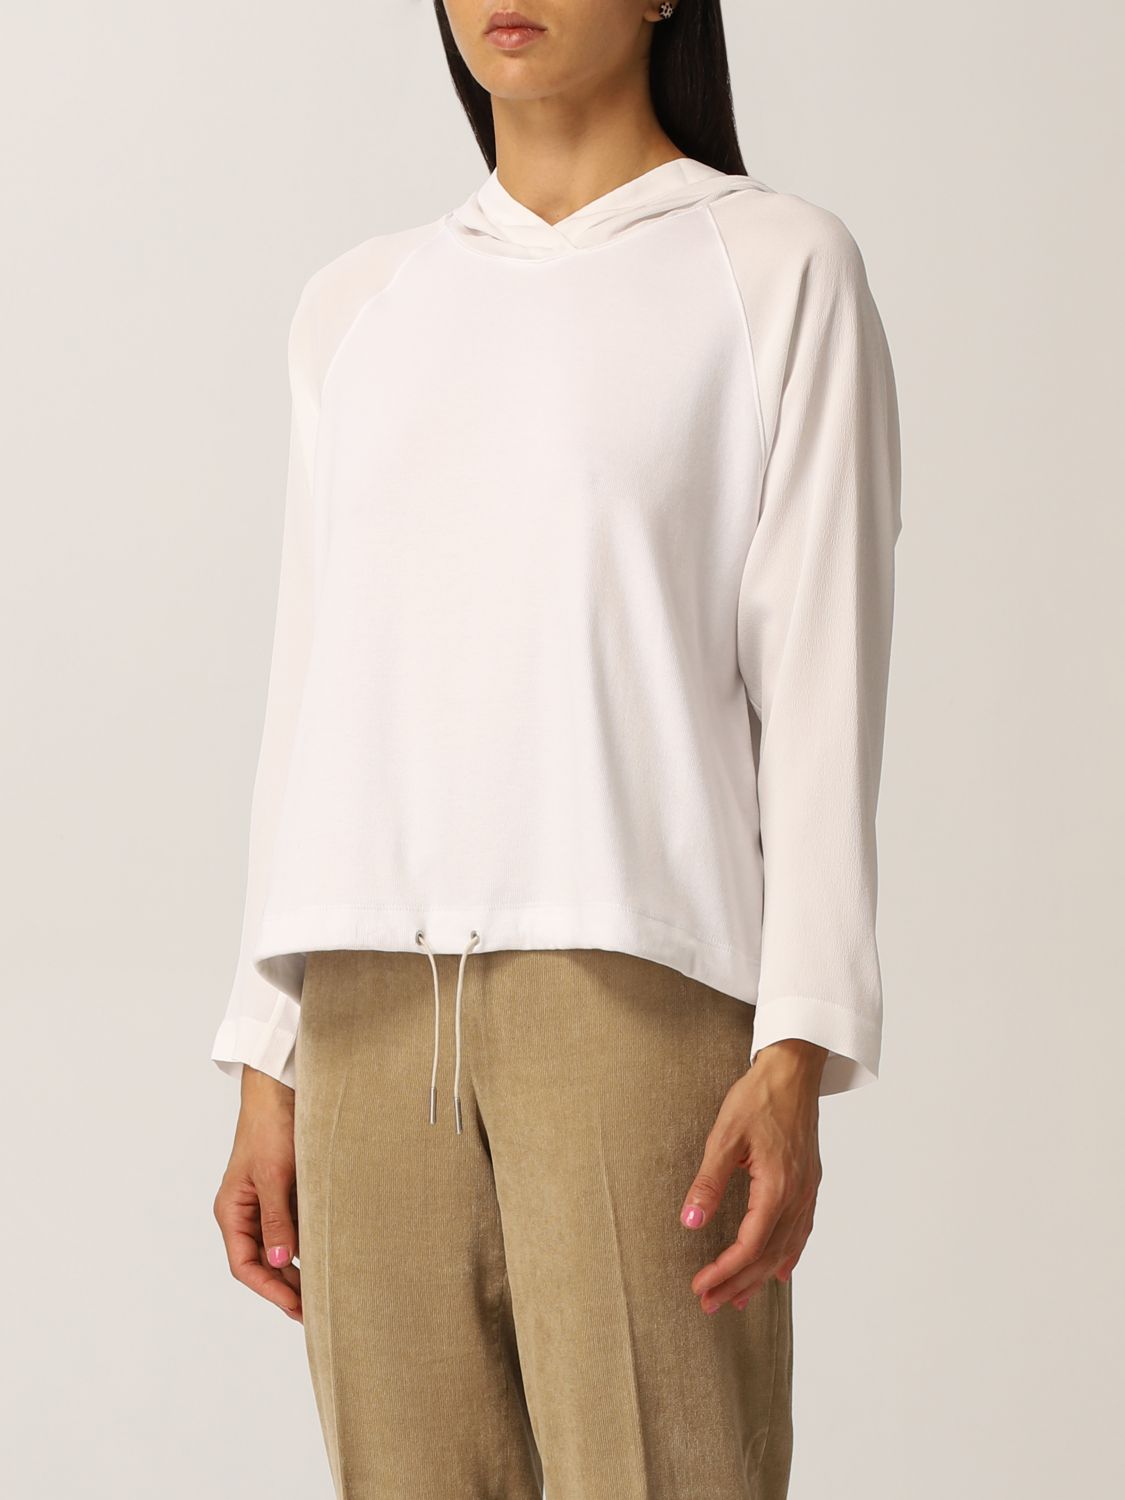 Femme Vêtements Sweats et pull overs Sweats et pull-overs Pullover Coton Fabiana Filippi en coloris Blanc 